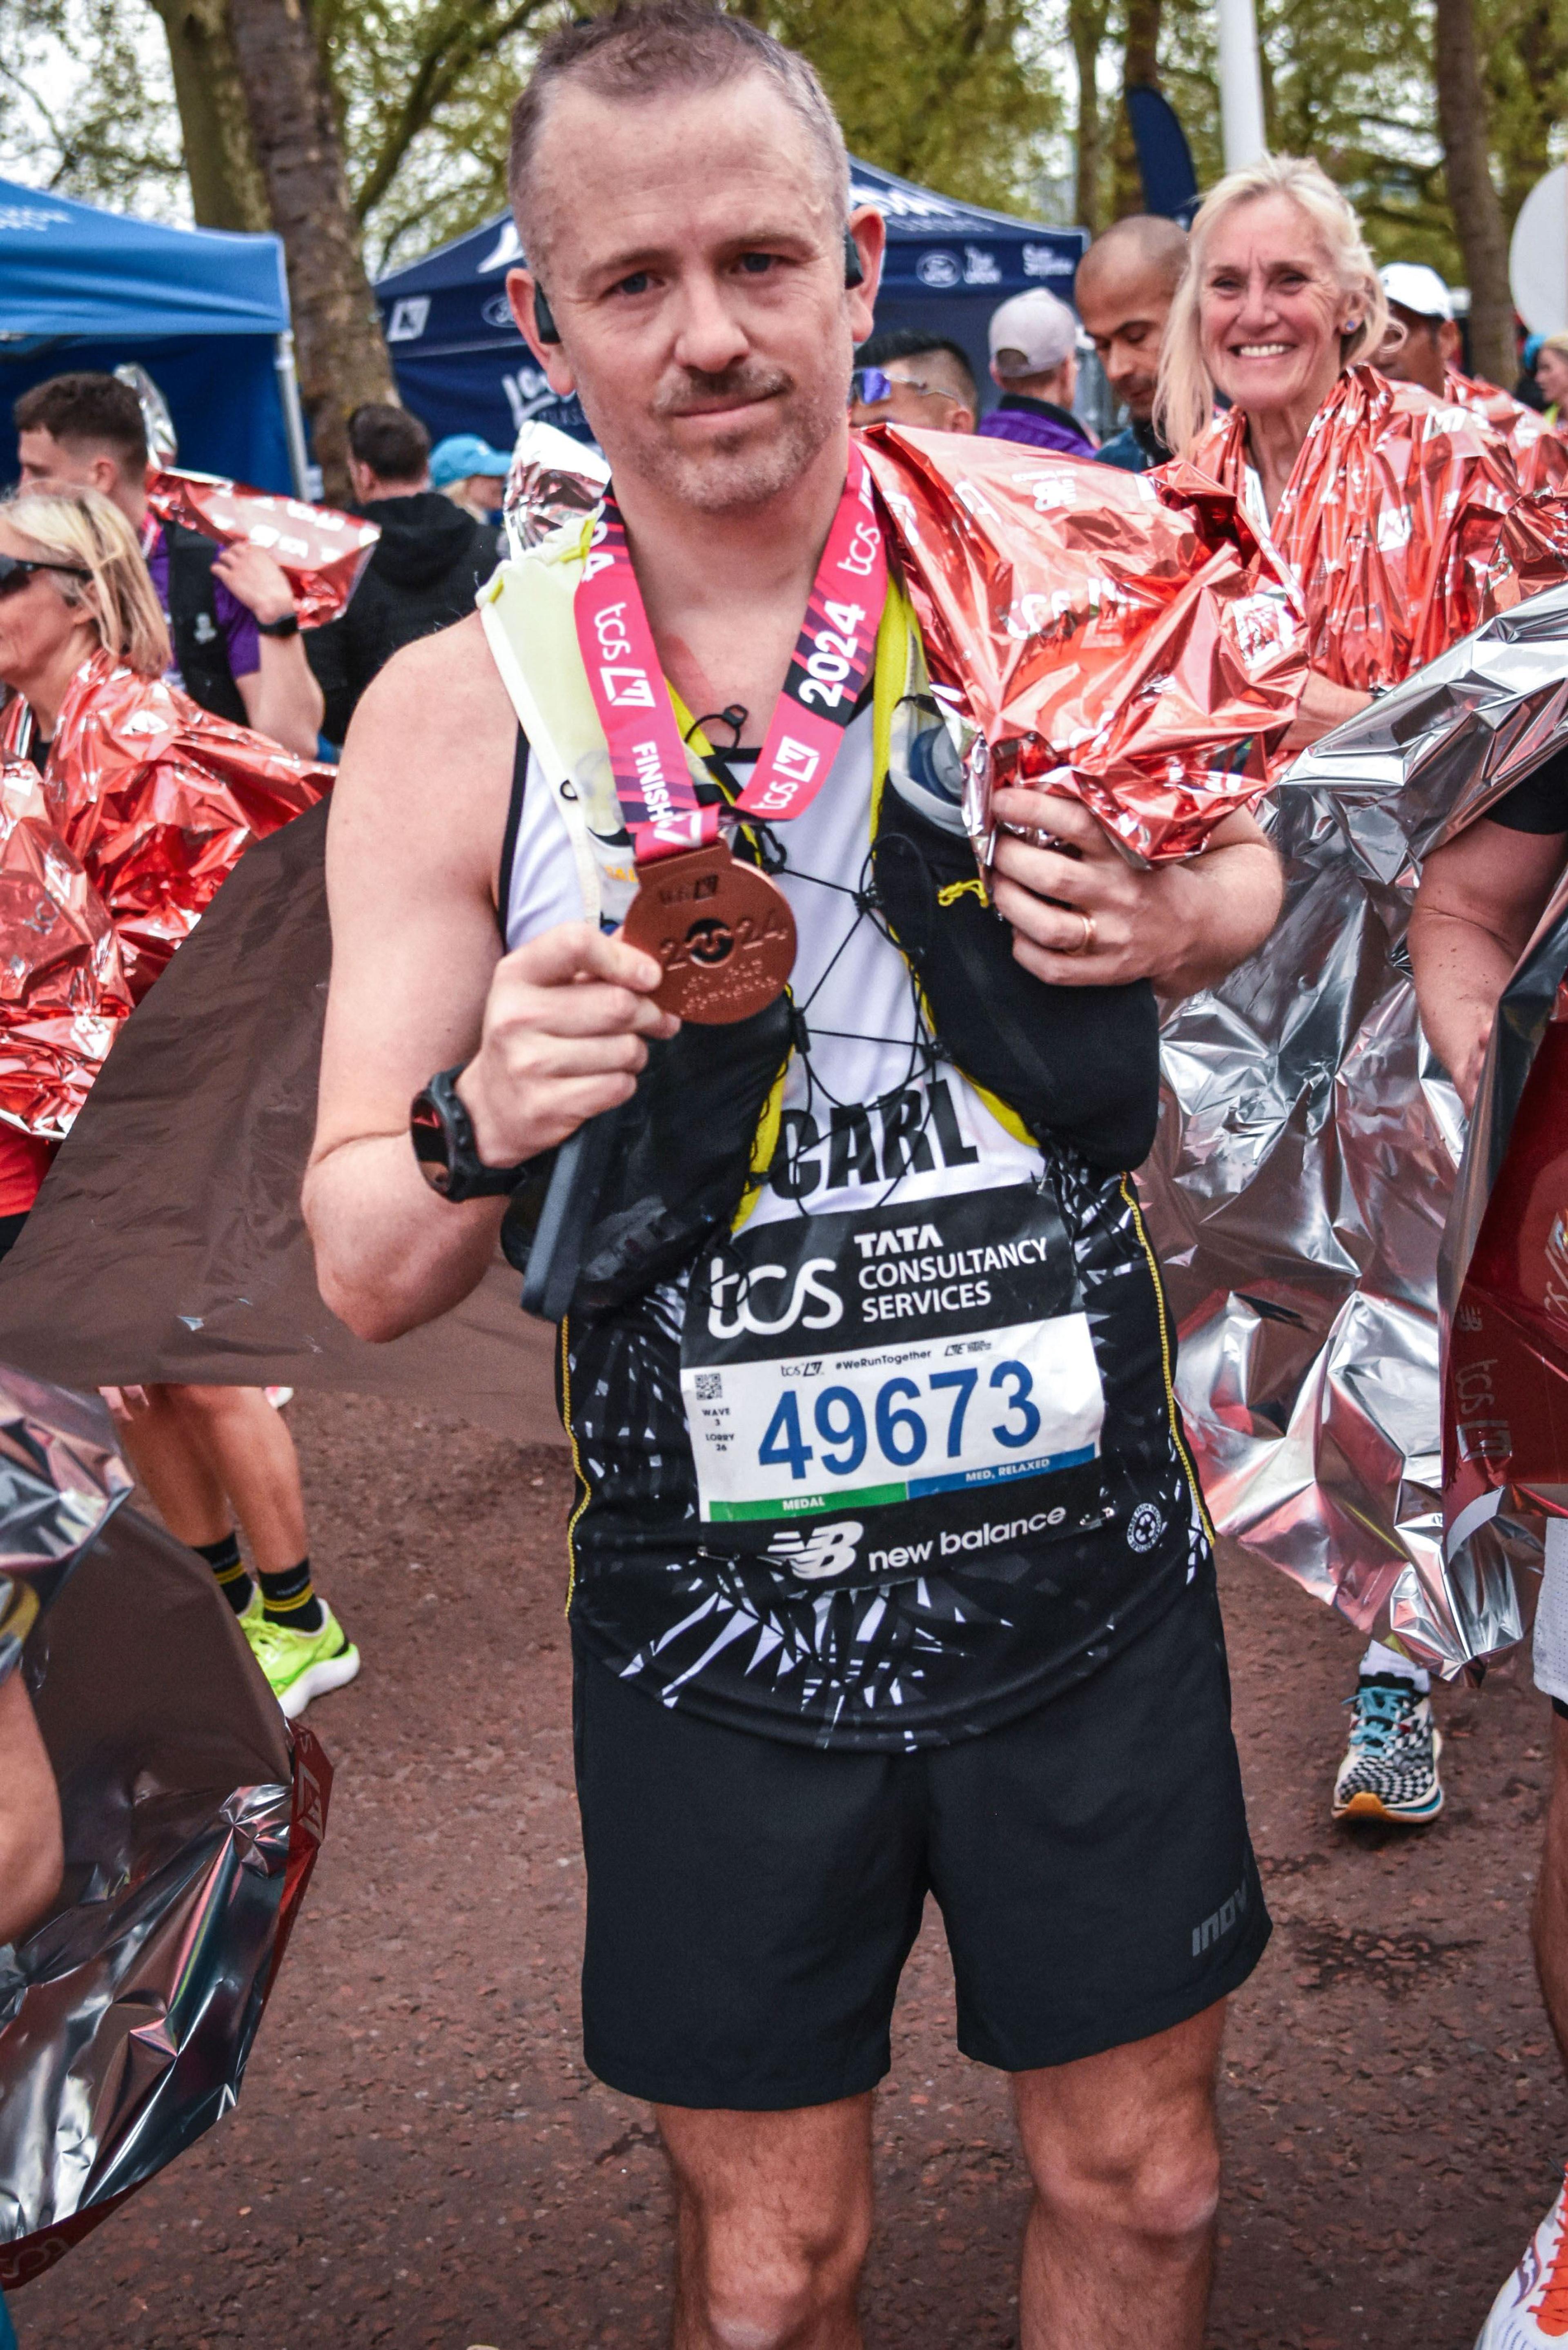 London Marathon Medal and me!